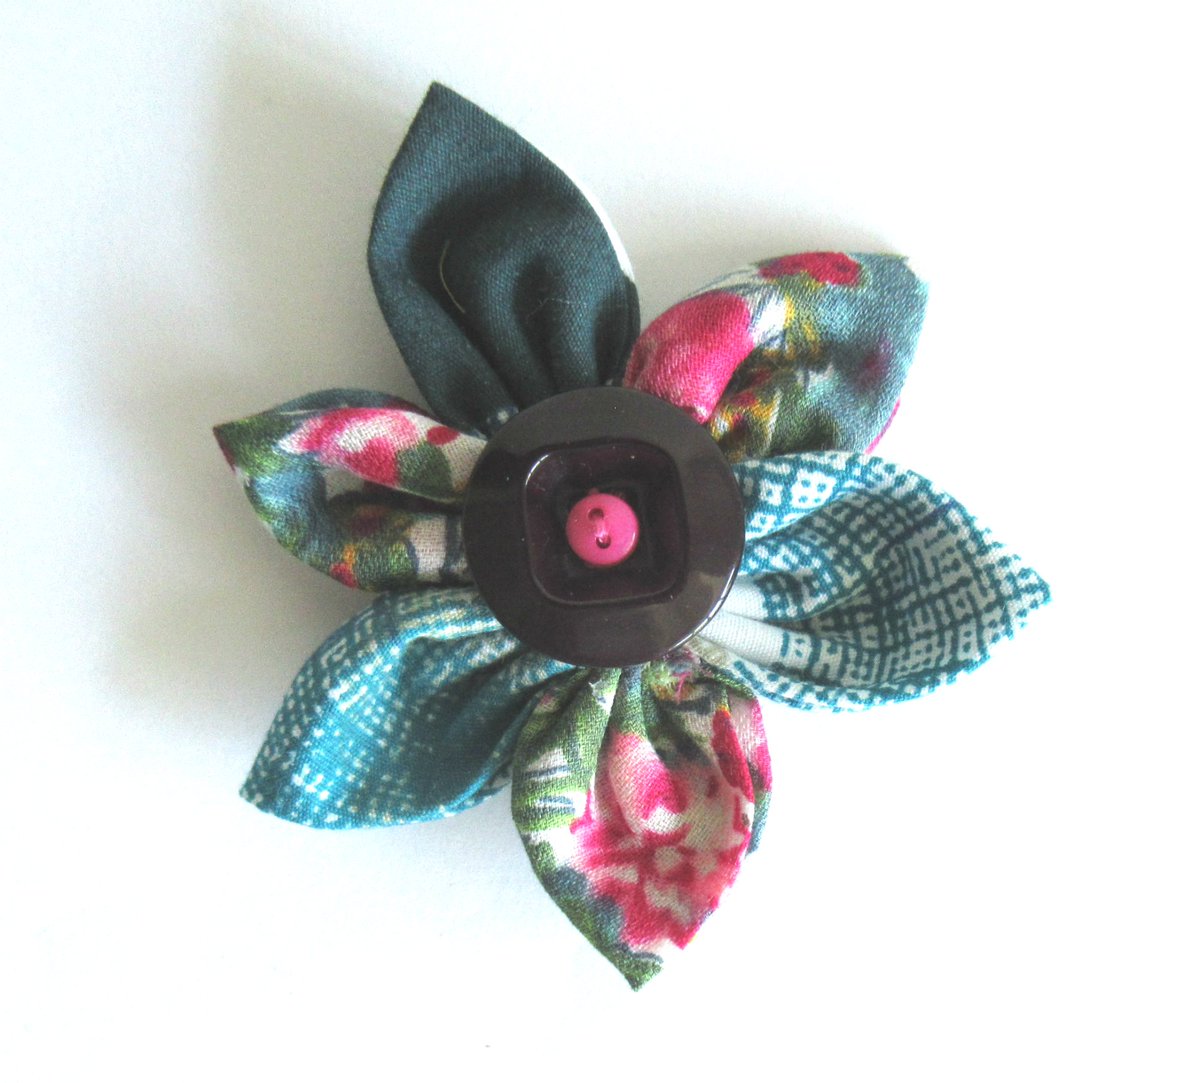 Soft Fabric Kanzashi Flower Brooch/  Hair clip/ Magnet, Handmade, OOAK Textile Flower w Black Button Center etsy.me/2UuajhP   #giftforher #Sustainability #gift #epiconetsy #etsyhandmade #etsymntt #specialtooo  #Specialtoo #womaninbiz